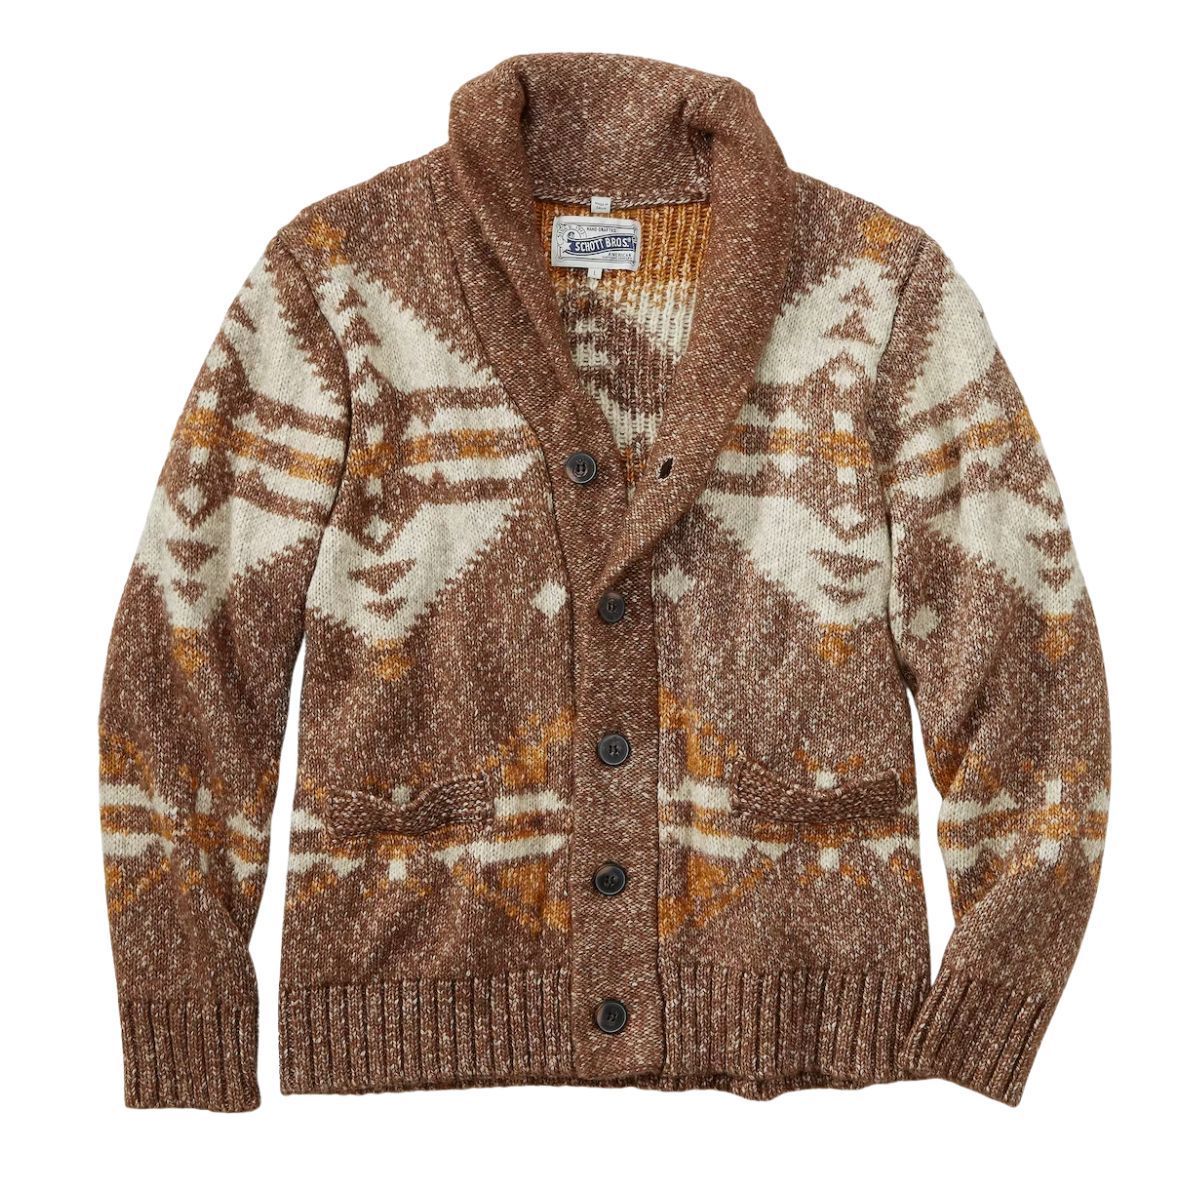 The Motif Cardigan Sweater